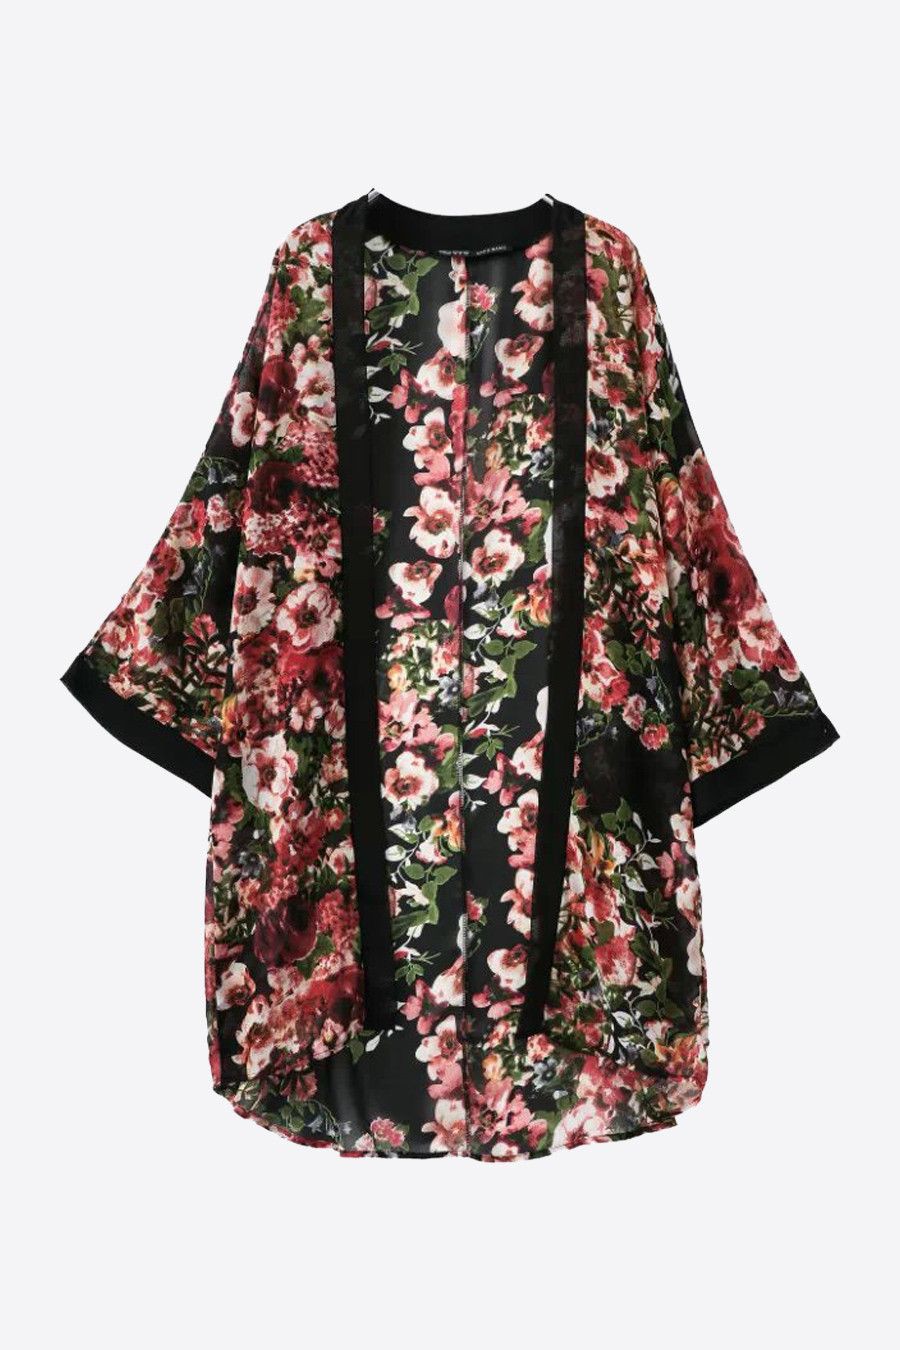 Cárdigan kimono de gasa floral, Diseño floral: Diseño floral,  trajes de kimono,  Atuendos Informales  